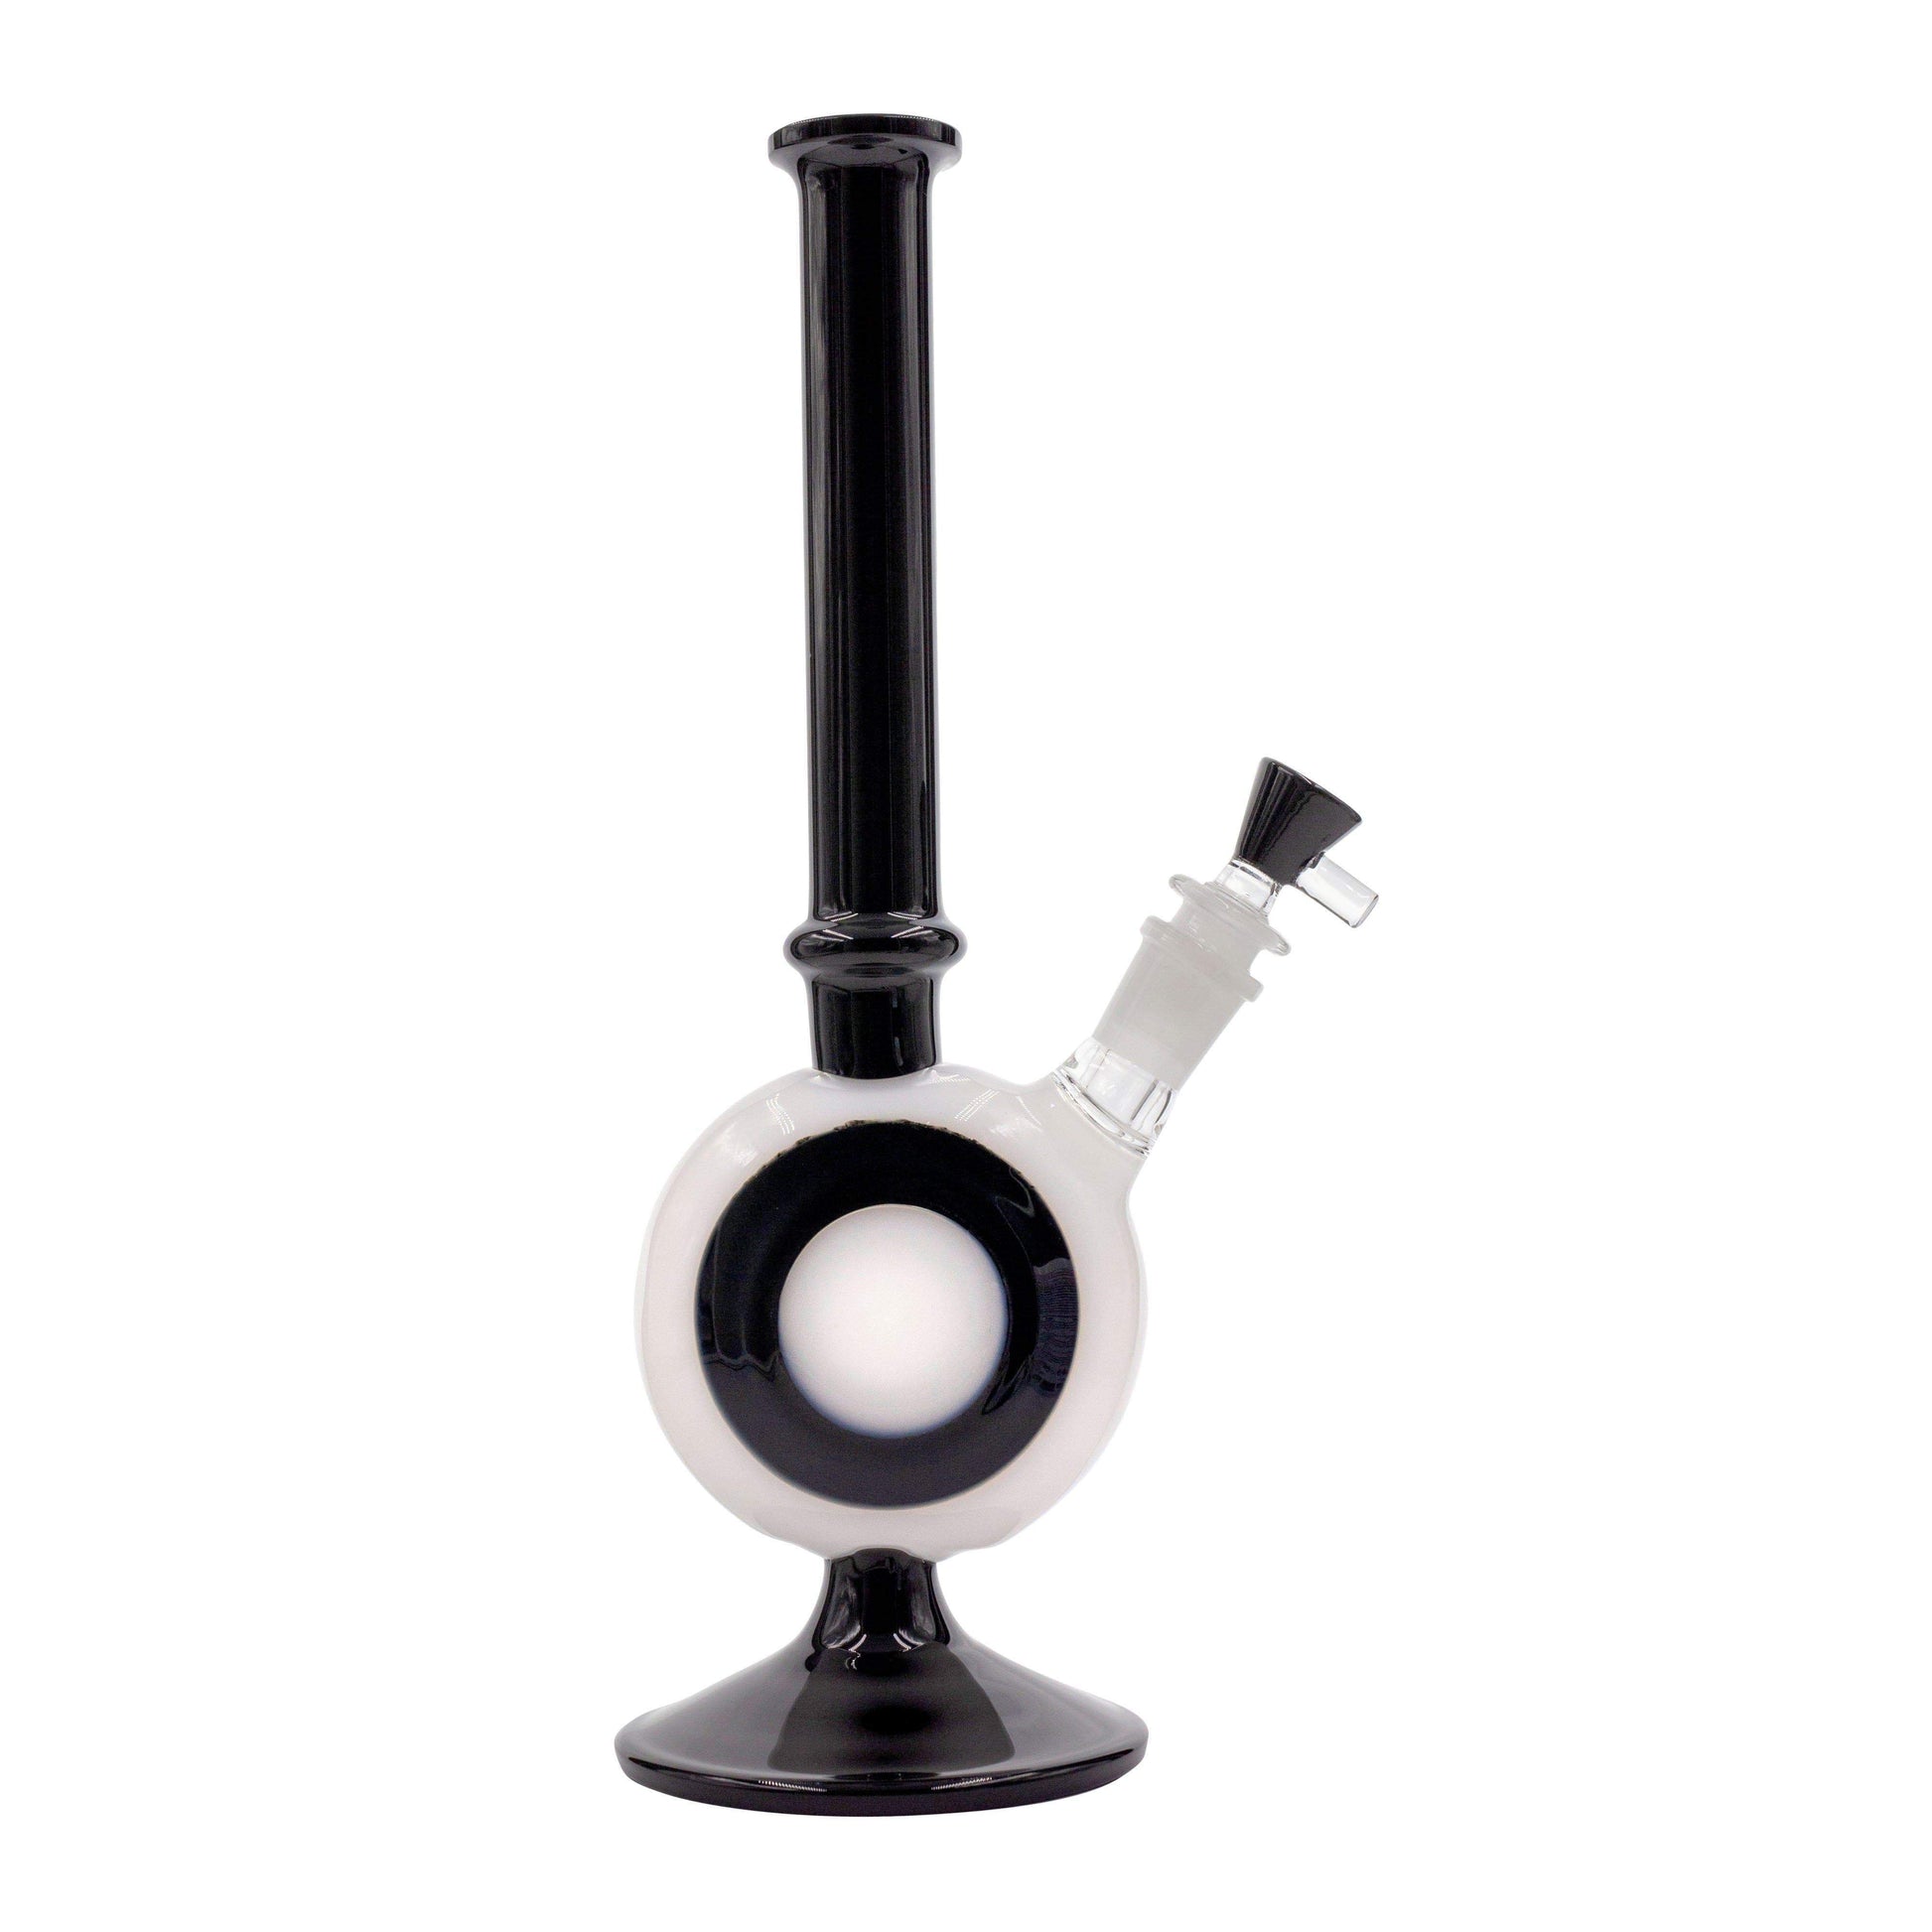 Classy 12-inch glass bong smoking device with splashguard eyeball-shaped chamber unique design